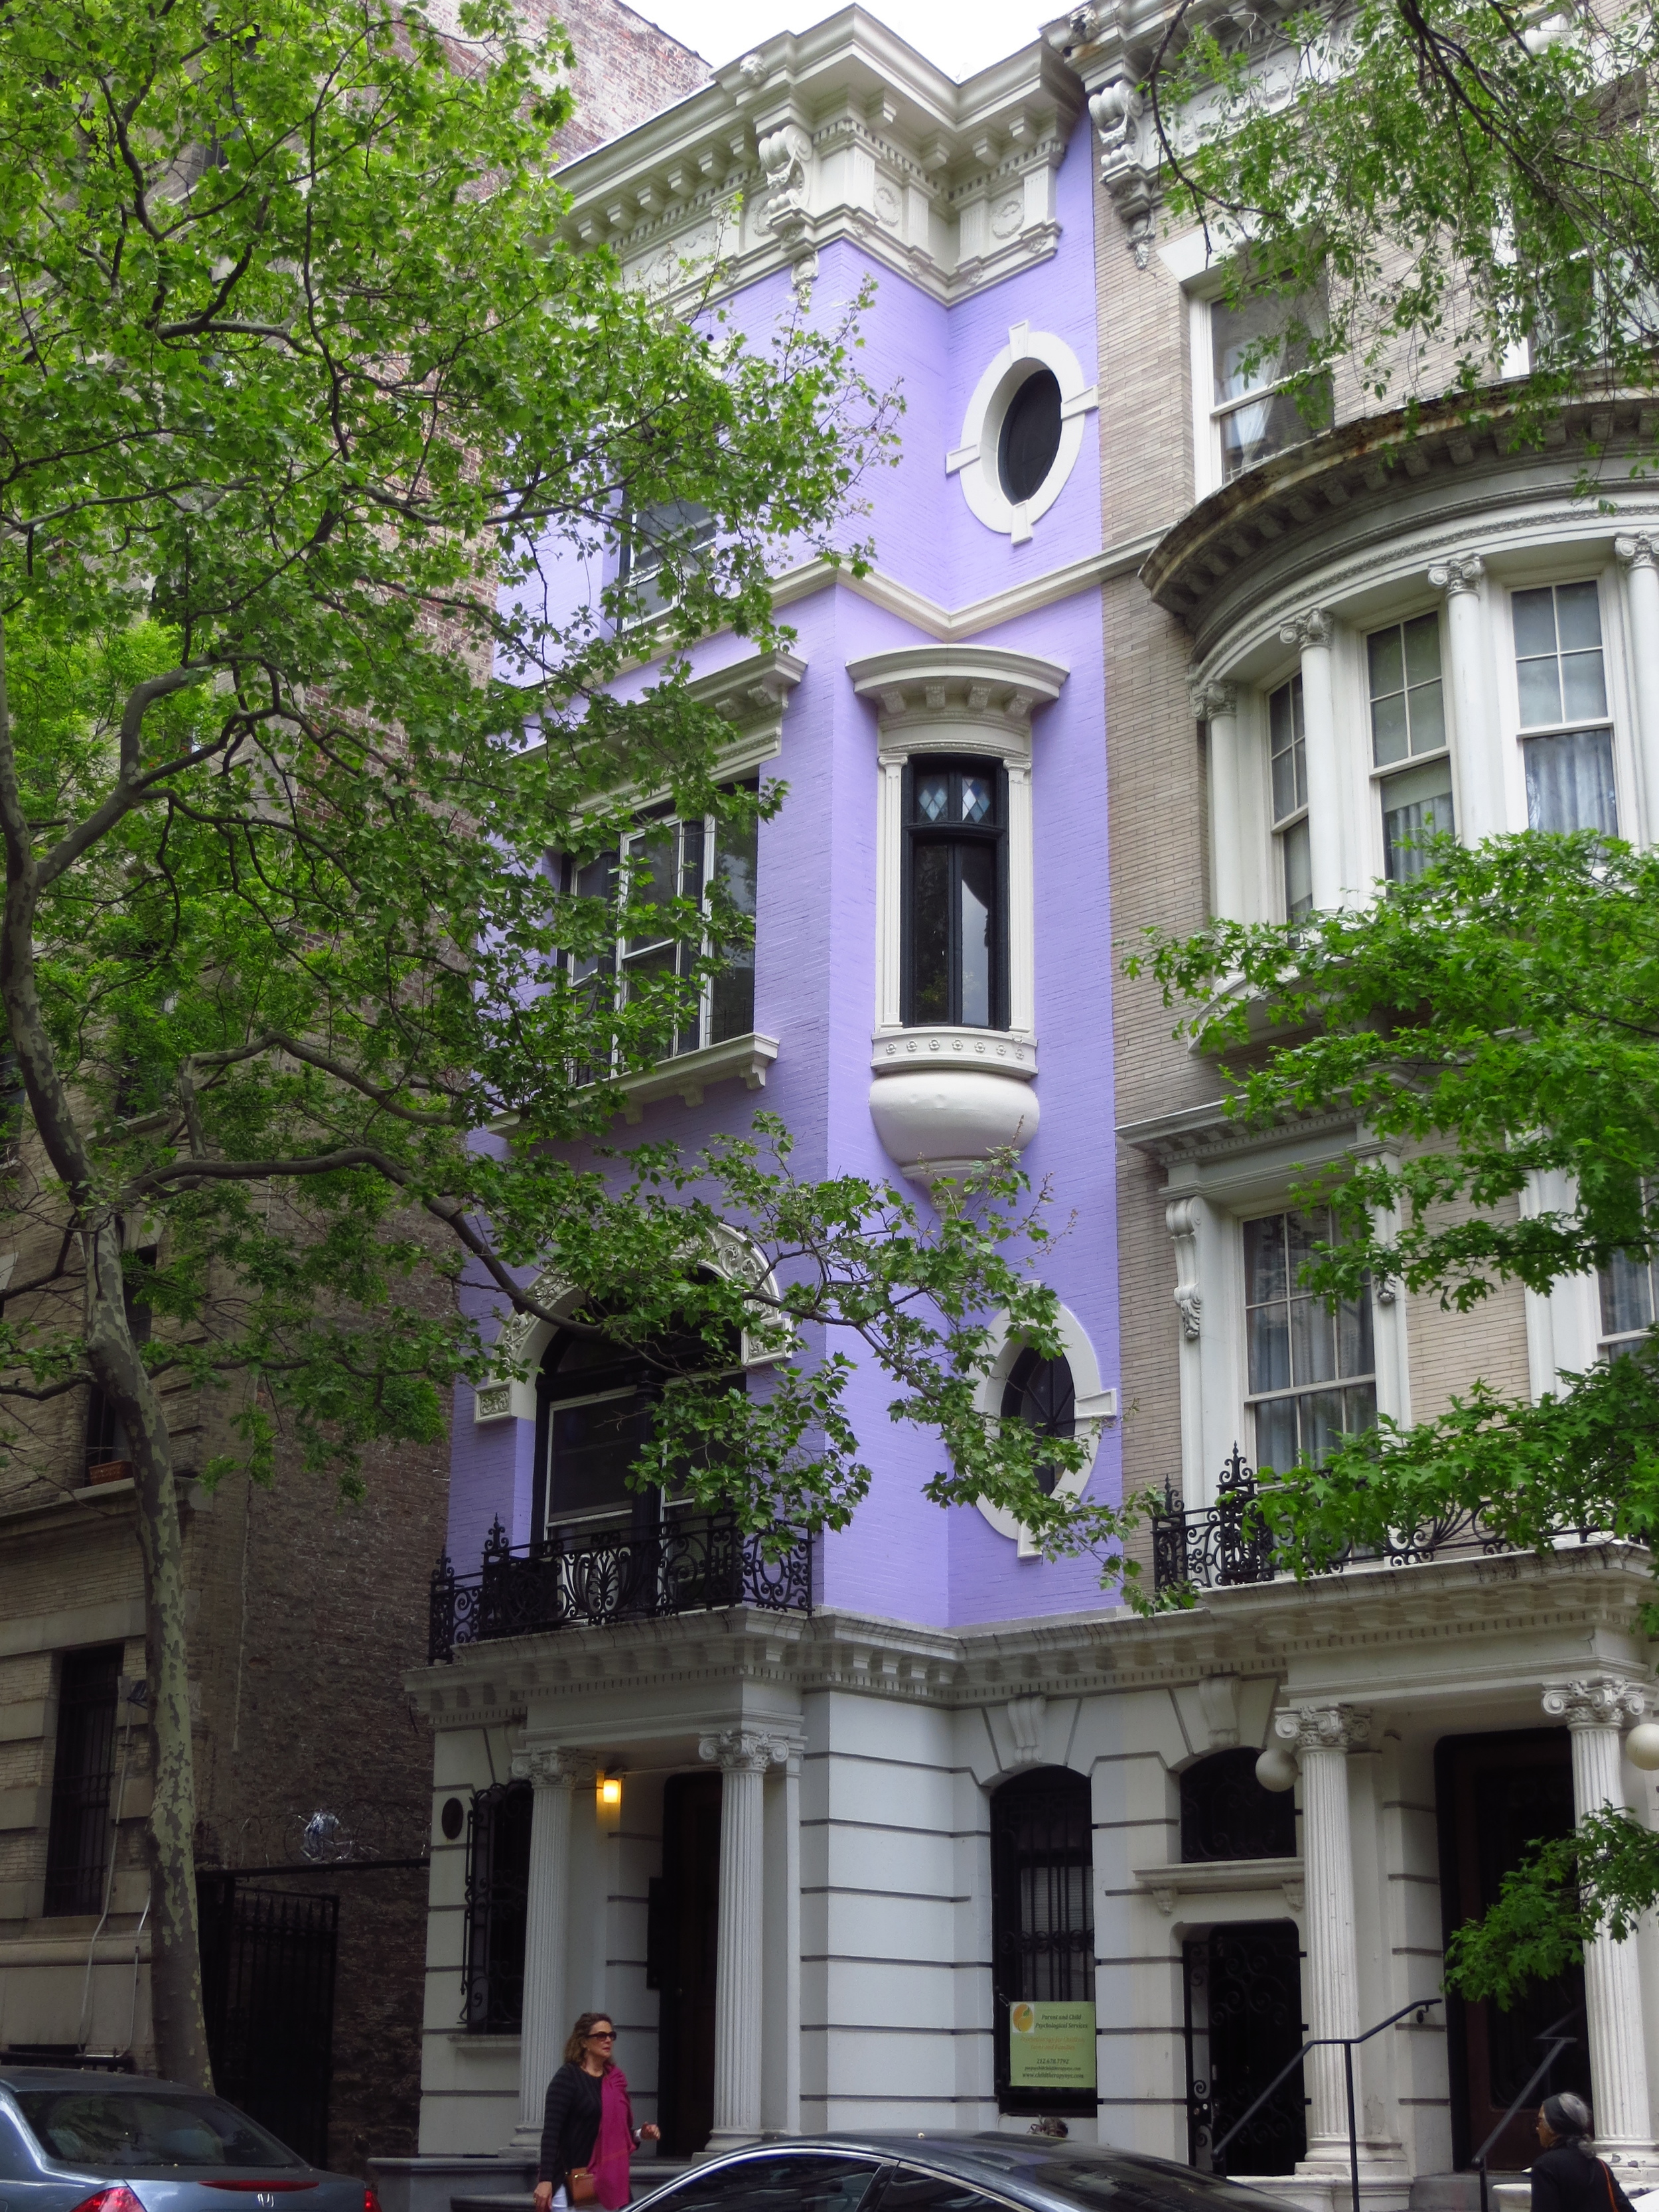 Purple house